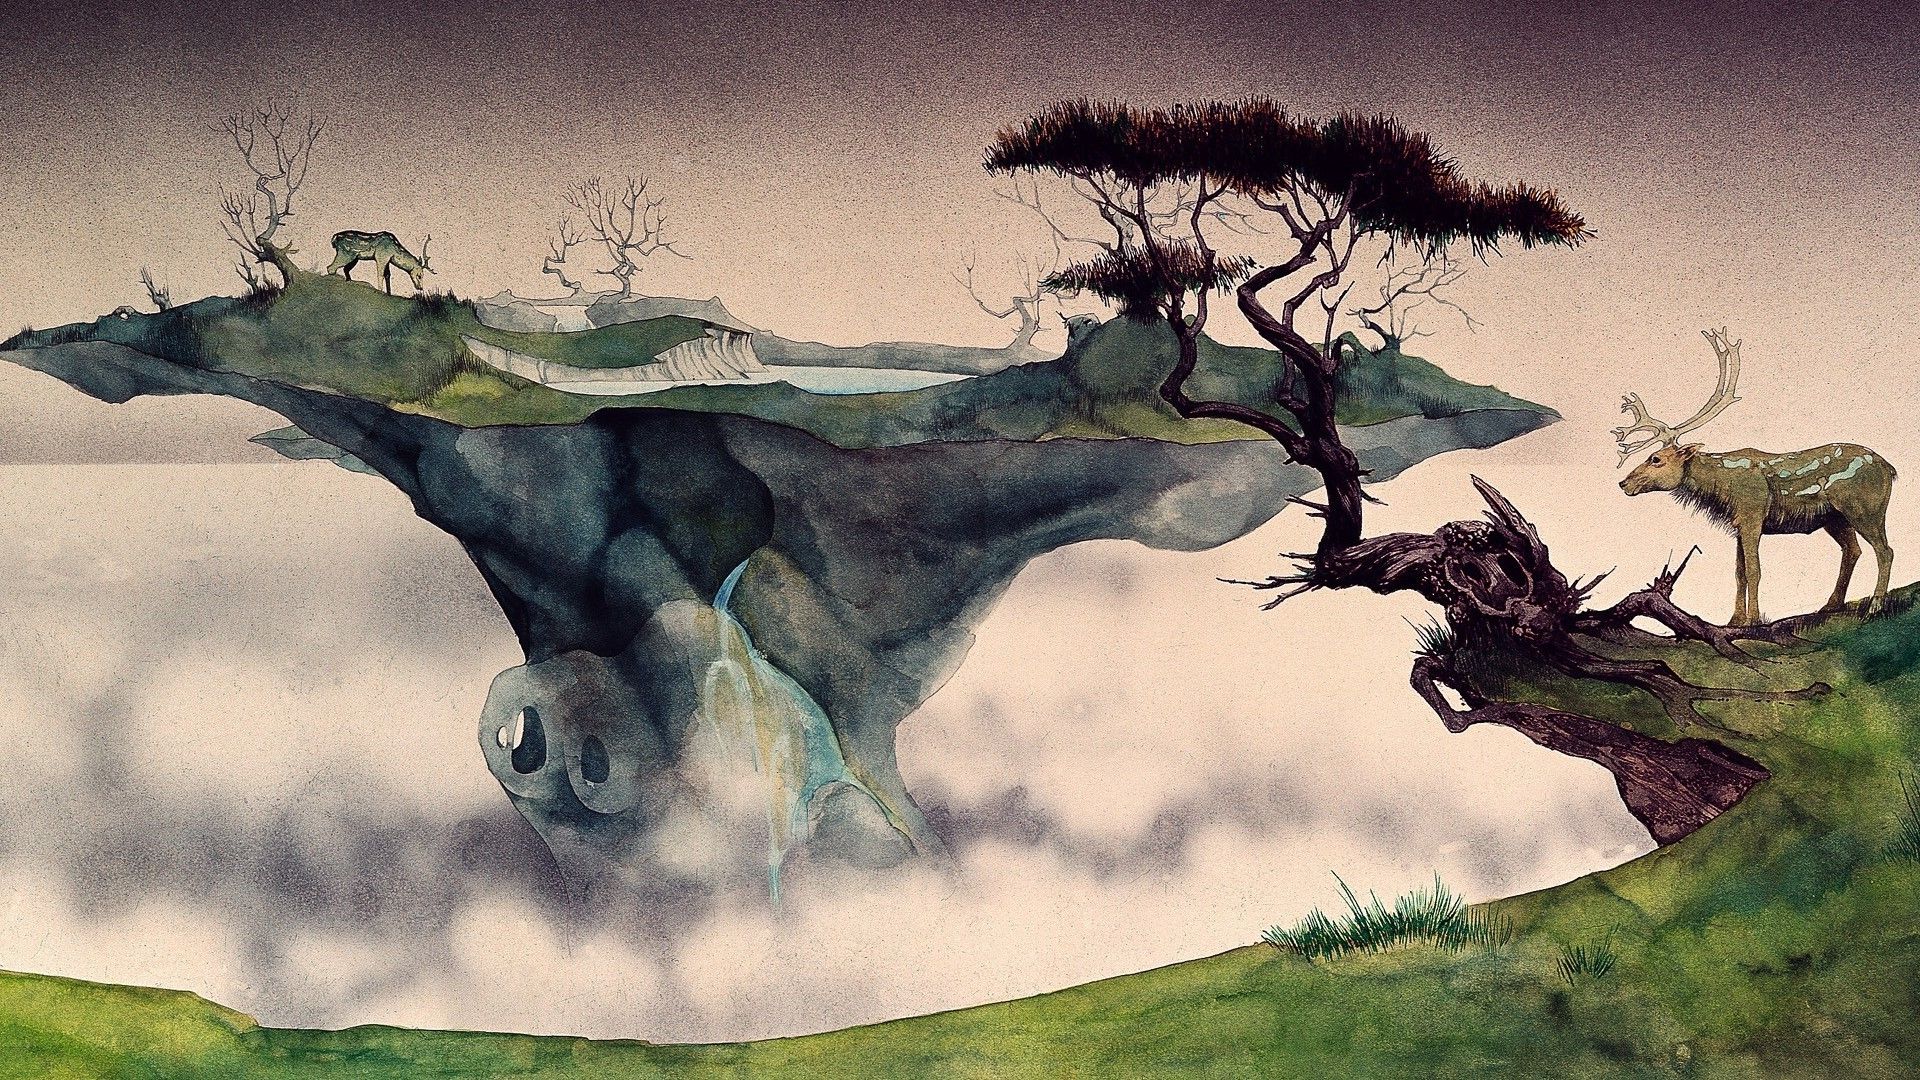 fantasy Art, Floating Island, Nature, Animals, Deer, Trees, Mist, Lake, Painting, Watercolor, Ink, Roger Dean Wallpaper HD / Desktop and Mobile Background